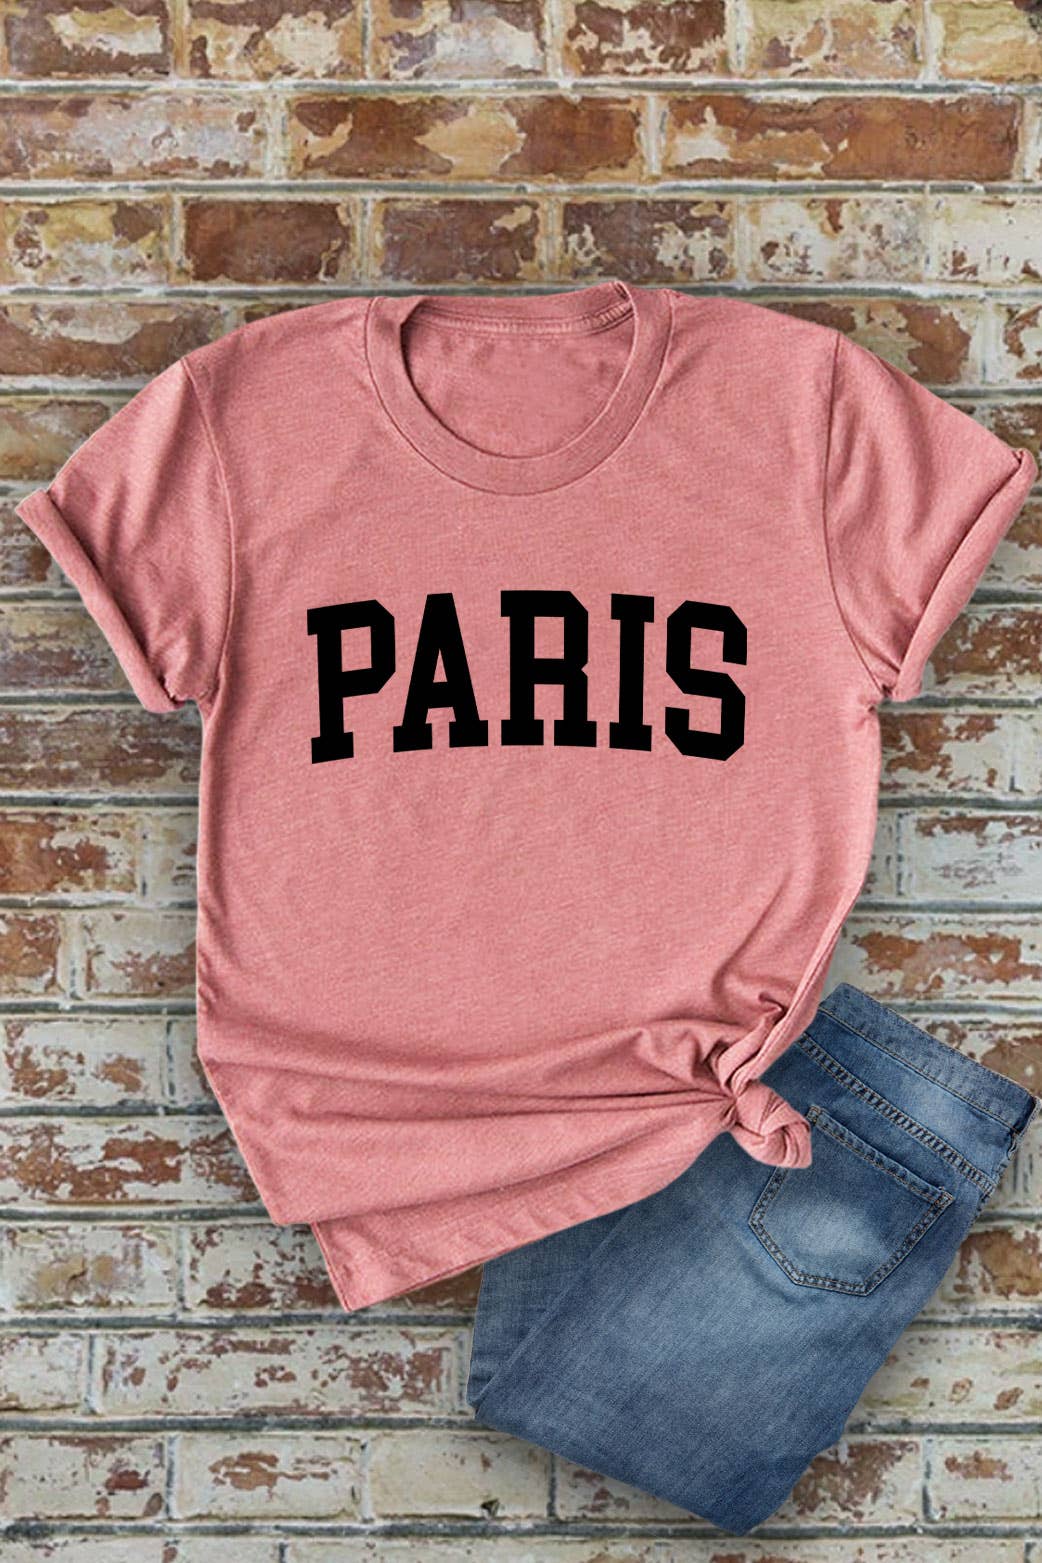 Paris, Unisex Round Neck Short Sleeve T-Shirt: S / Charcoal